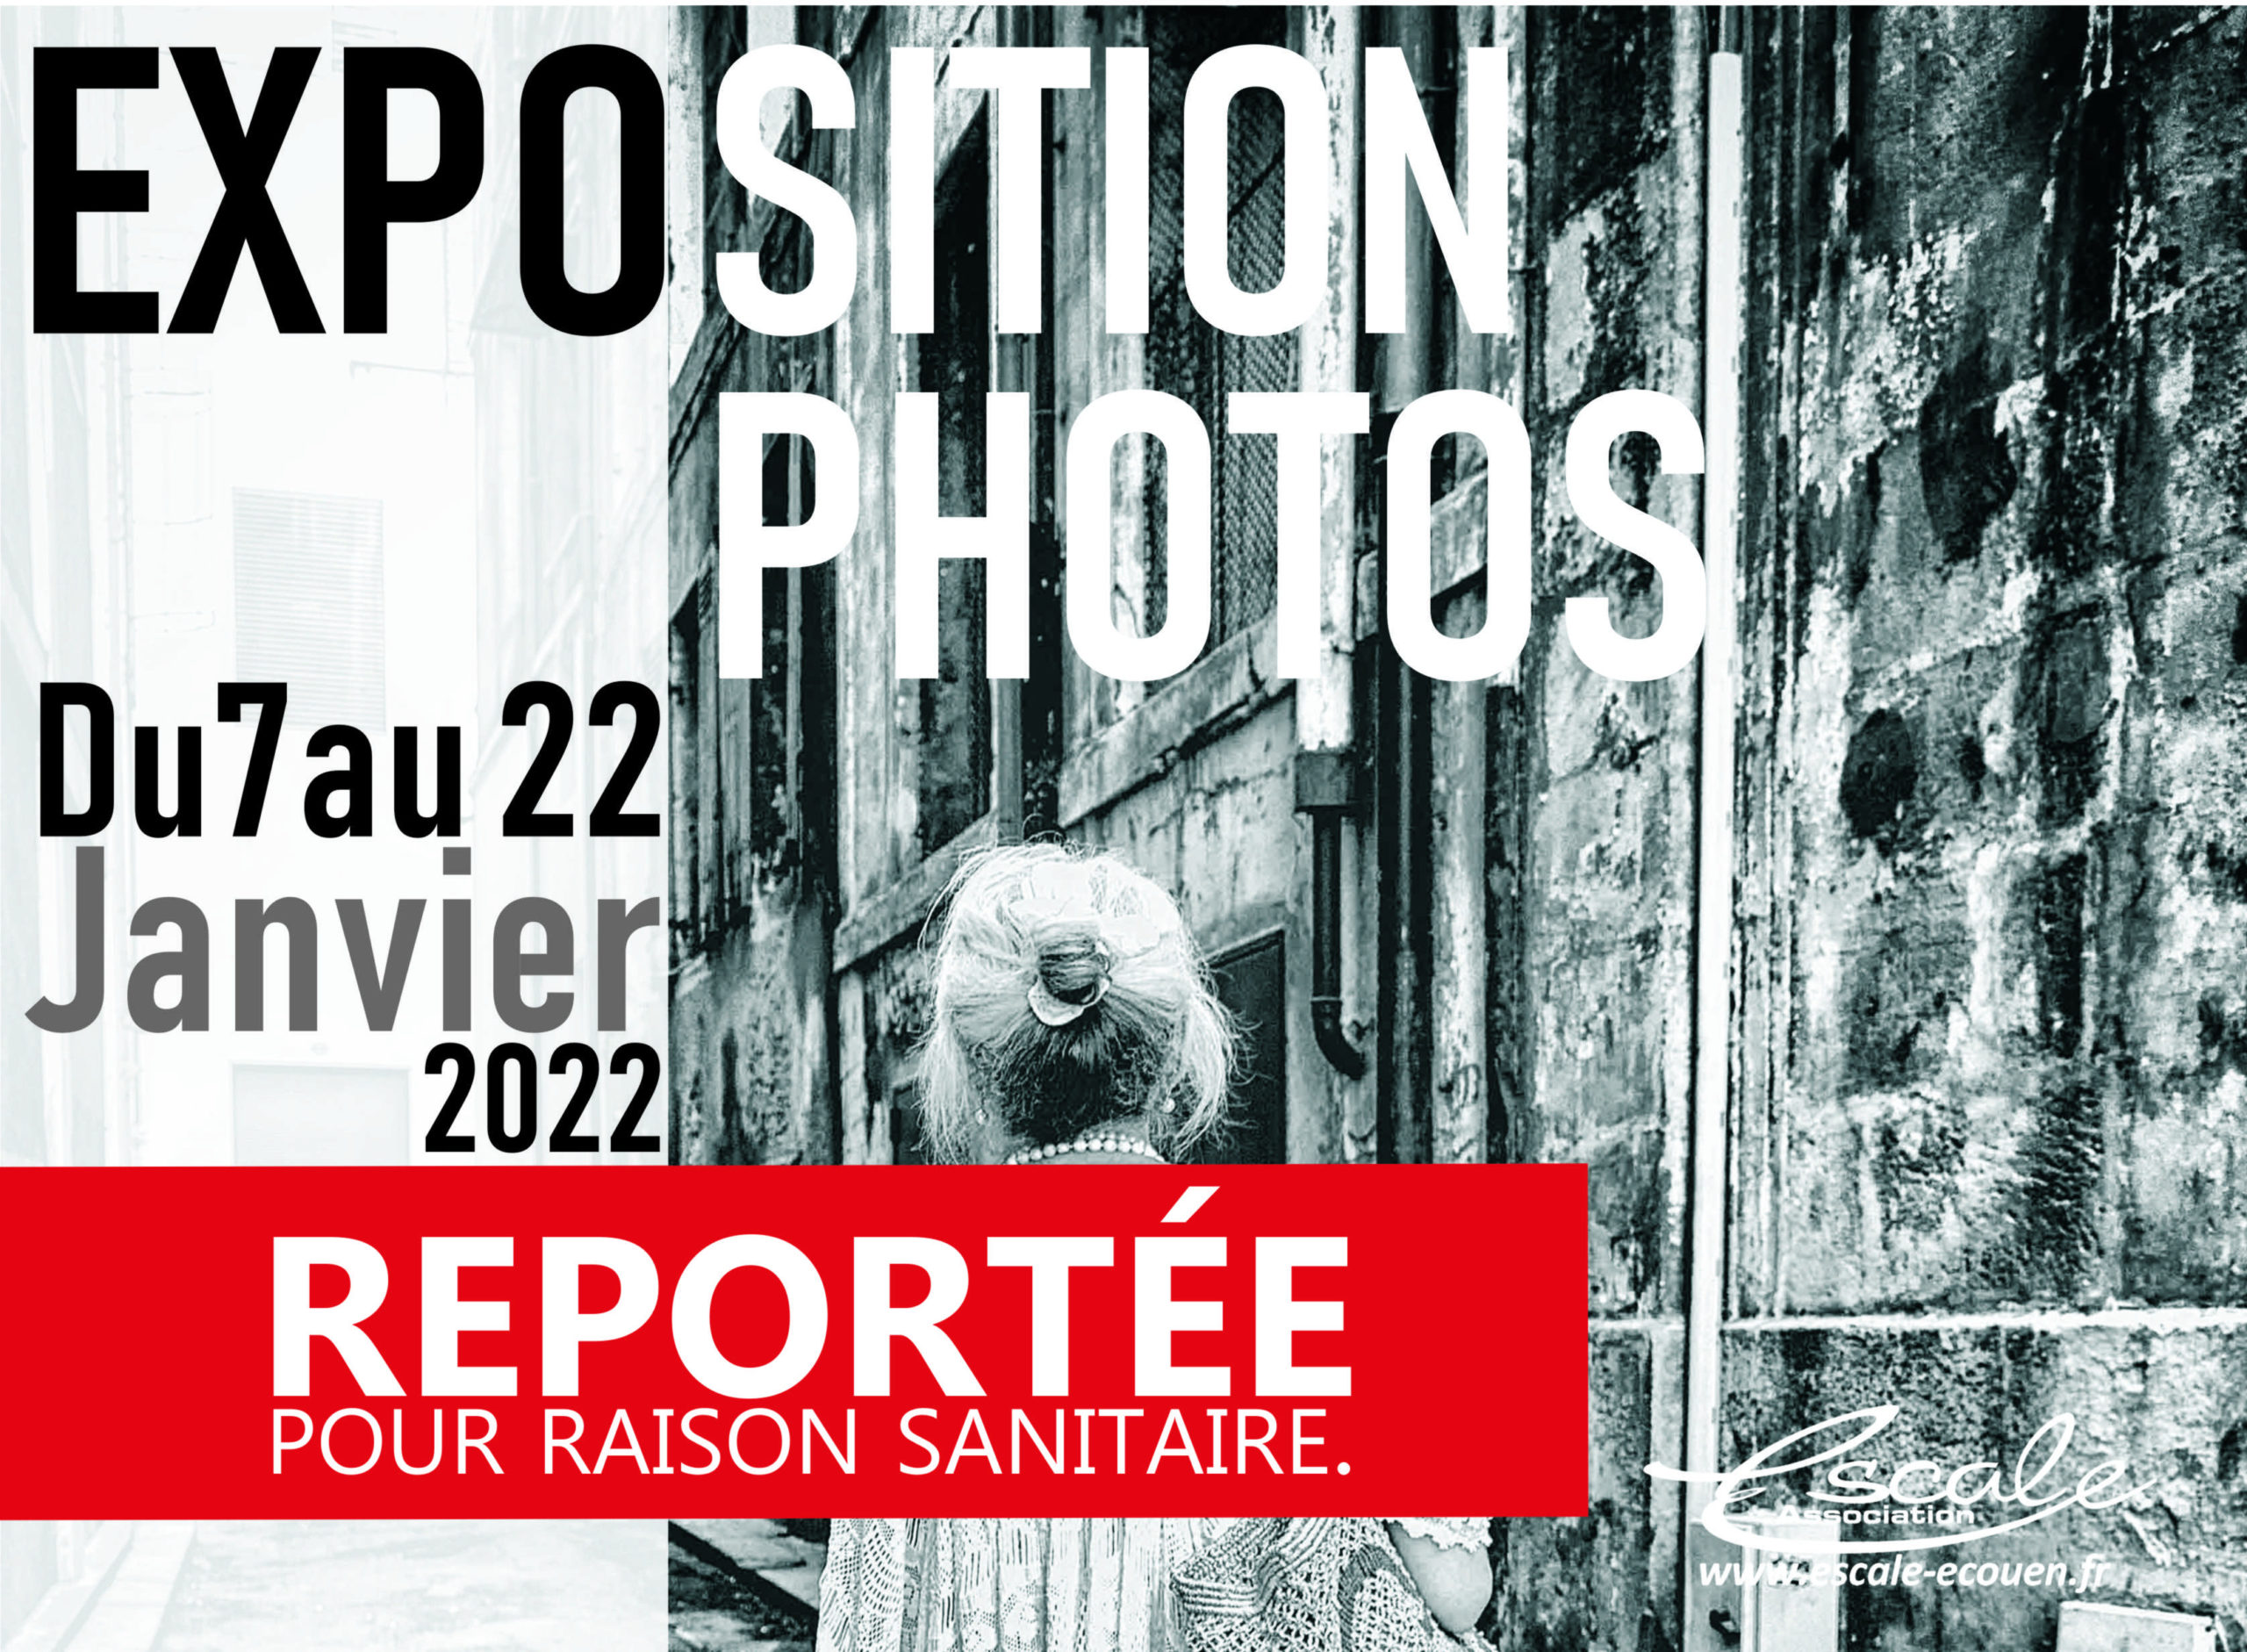 You are currently viewing L’EXPOSITION PHOTO REPORTÉE POUR RAISON SANITAIRE